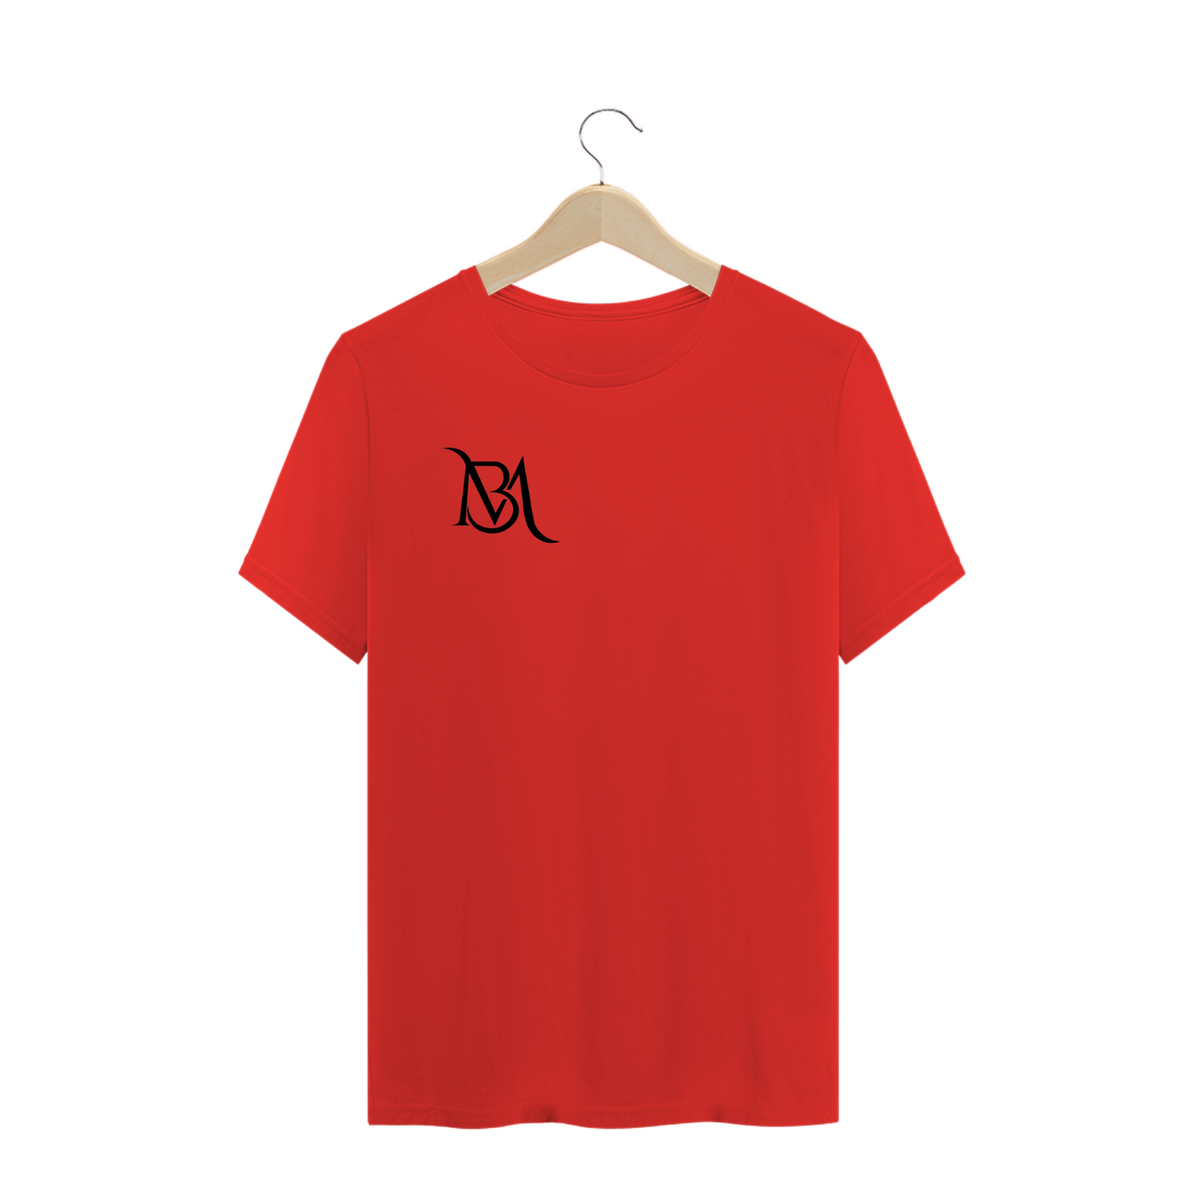 Nome do produto: Camiseta MB Oficial